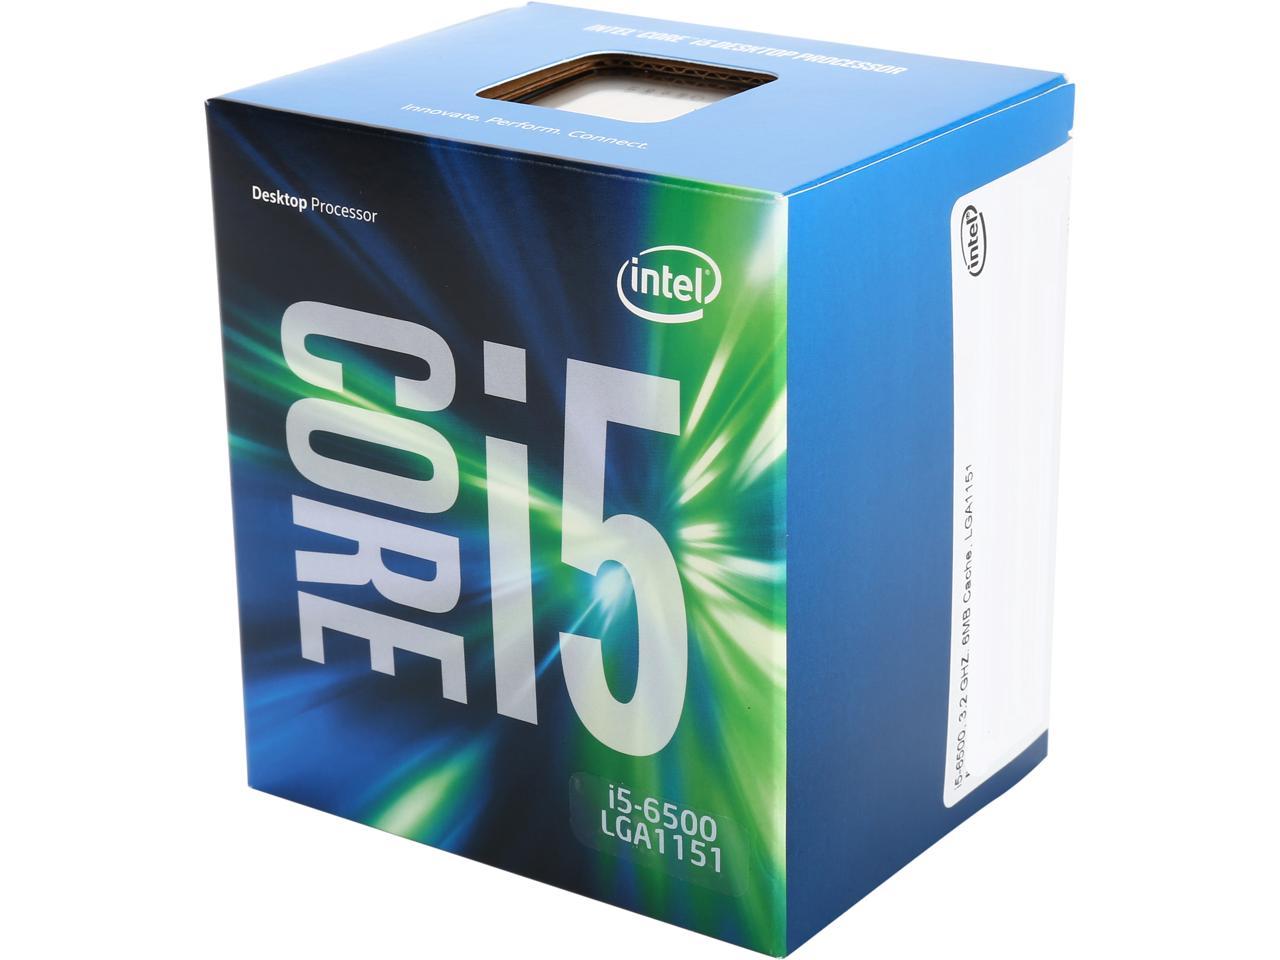 PC/タブレット PCパーツ Intel Core i5-6500 - Core i5 6th Gen Skylake Quad-Core 3.2 GHz LGA 1151 65W  Intel HD Graphics 530 Desktop Processor - BX80662I56500